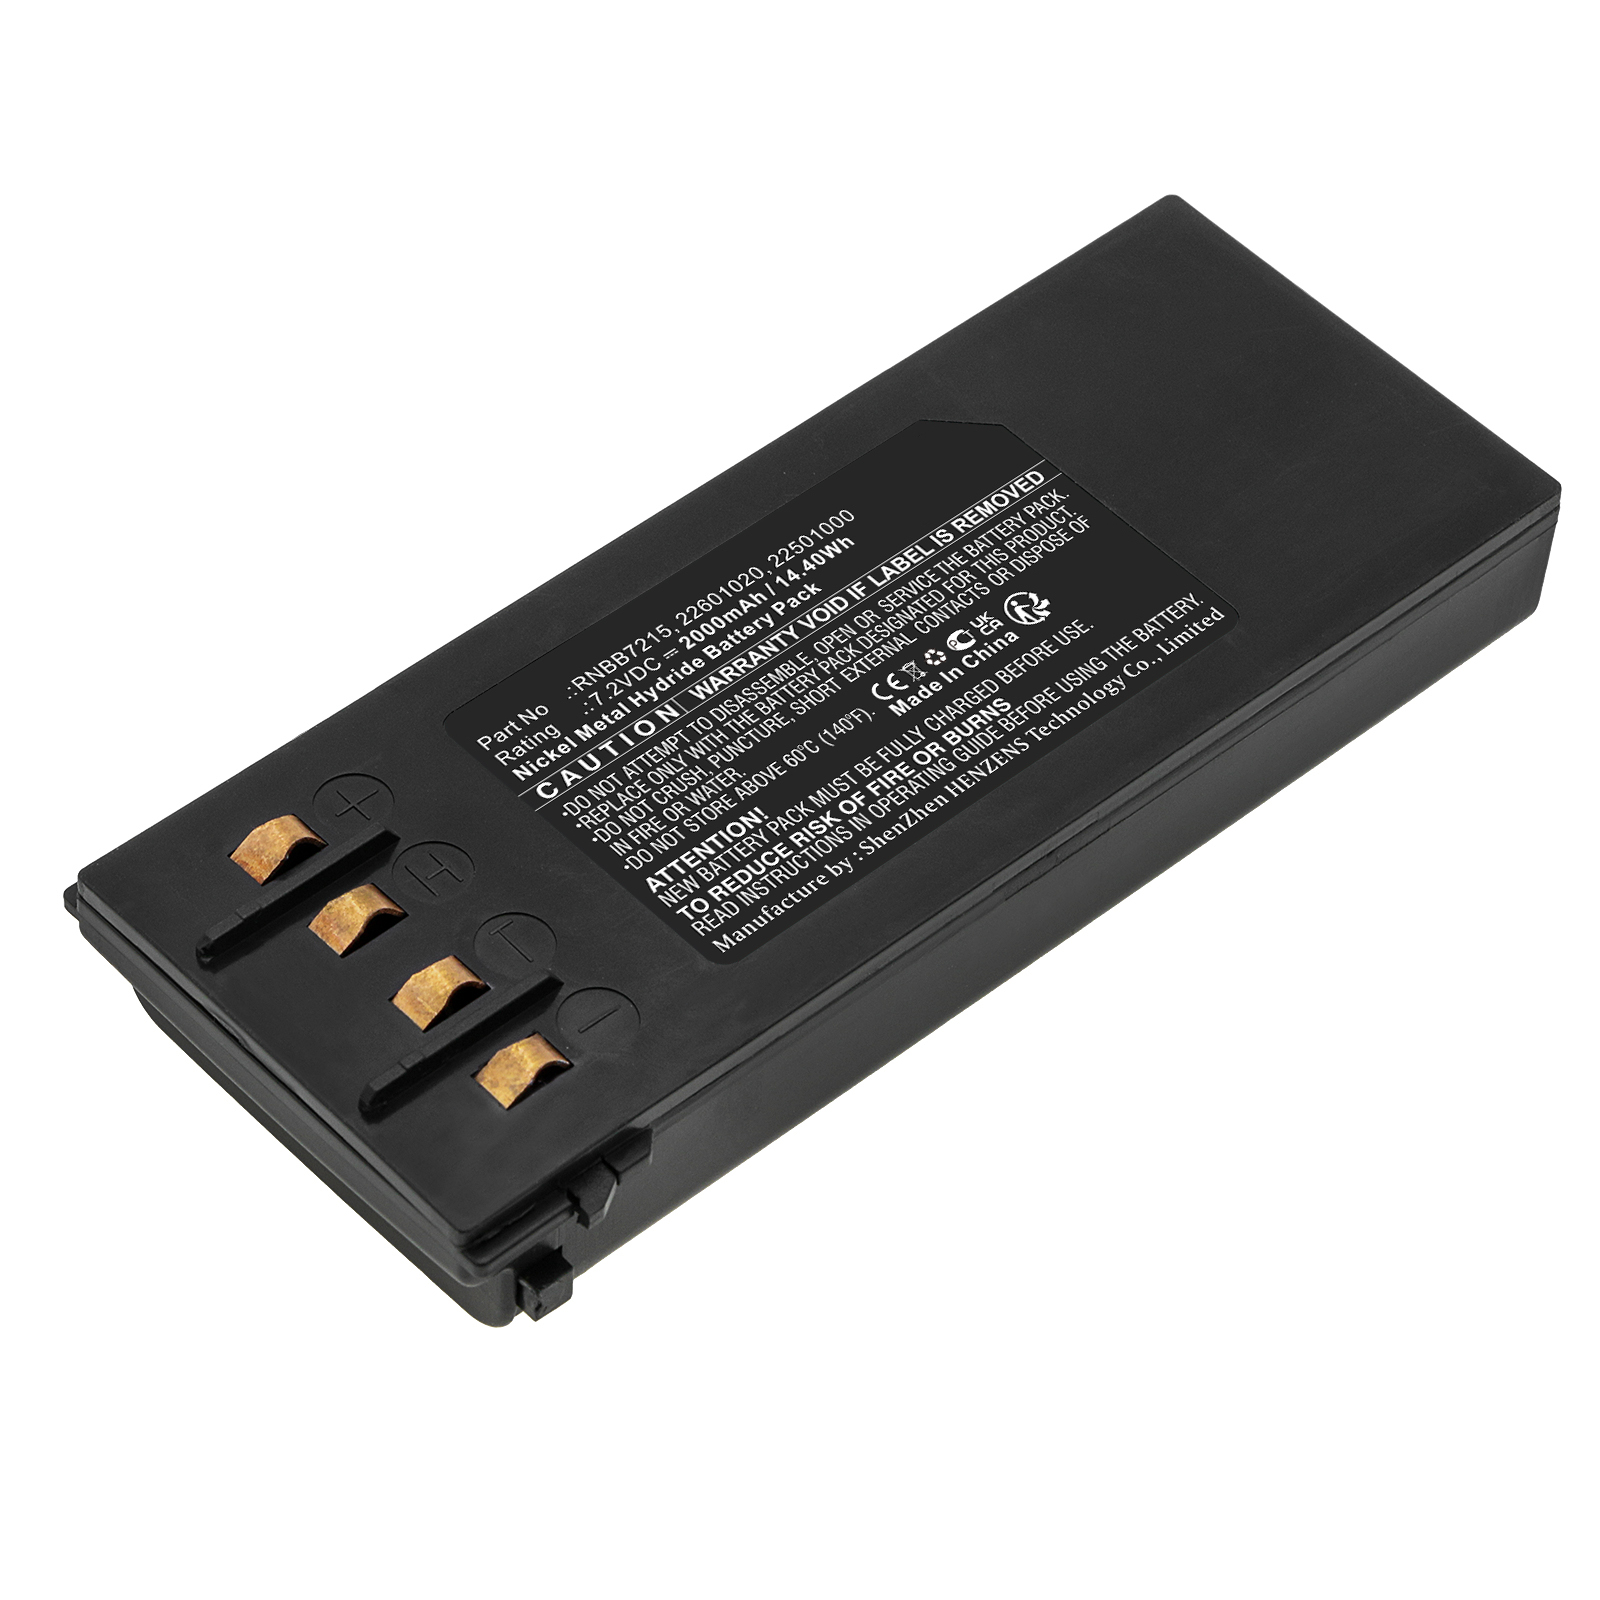 Synergy Digital Remote Control Battery, Compatible with NBB 2.250.1000 Remote Control Battery (Ni-MH, 7.2V, 2000mAh)